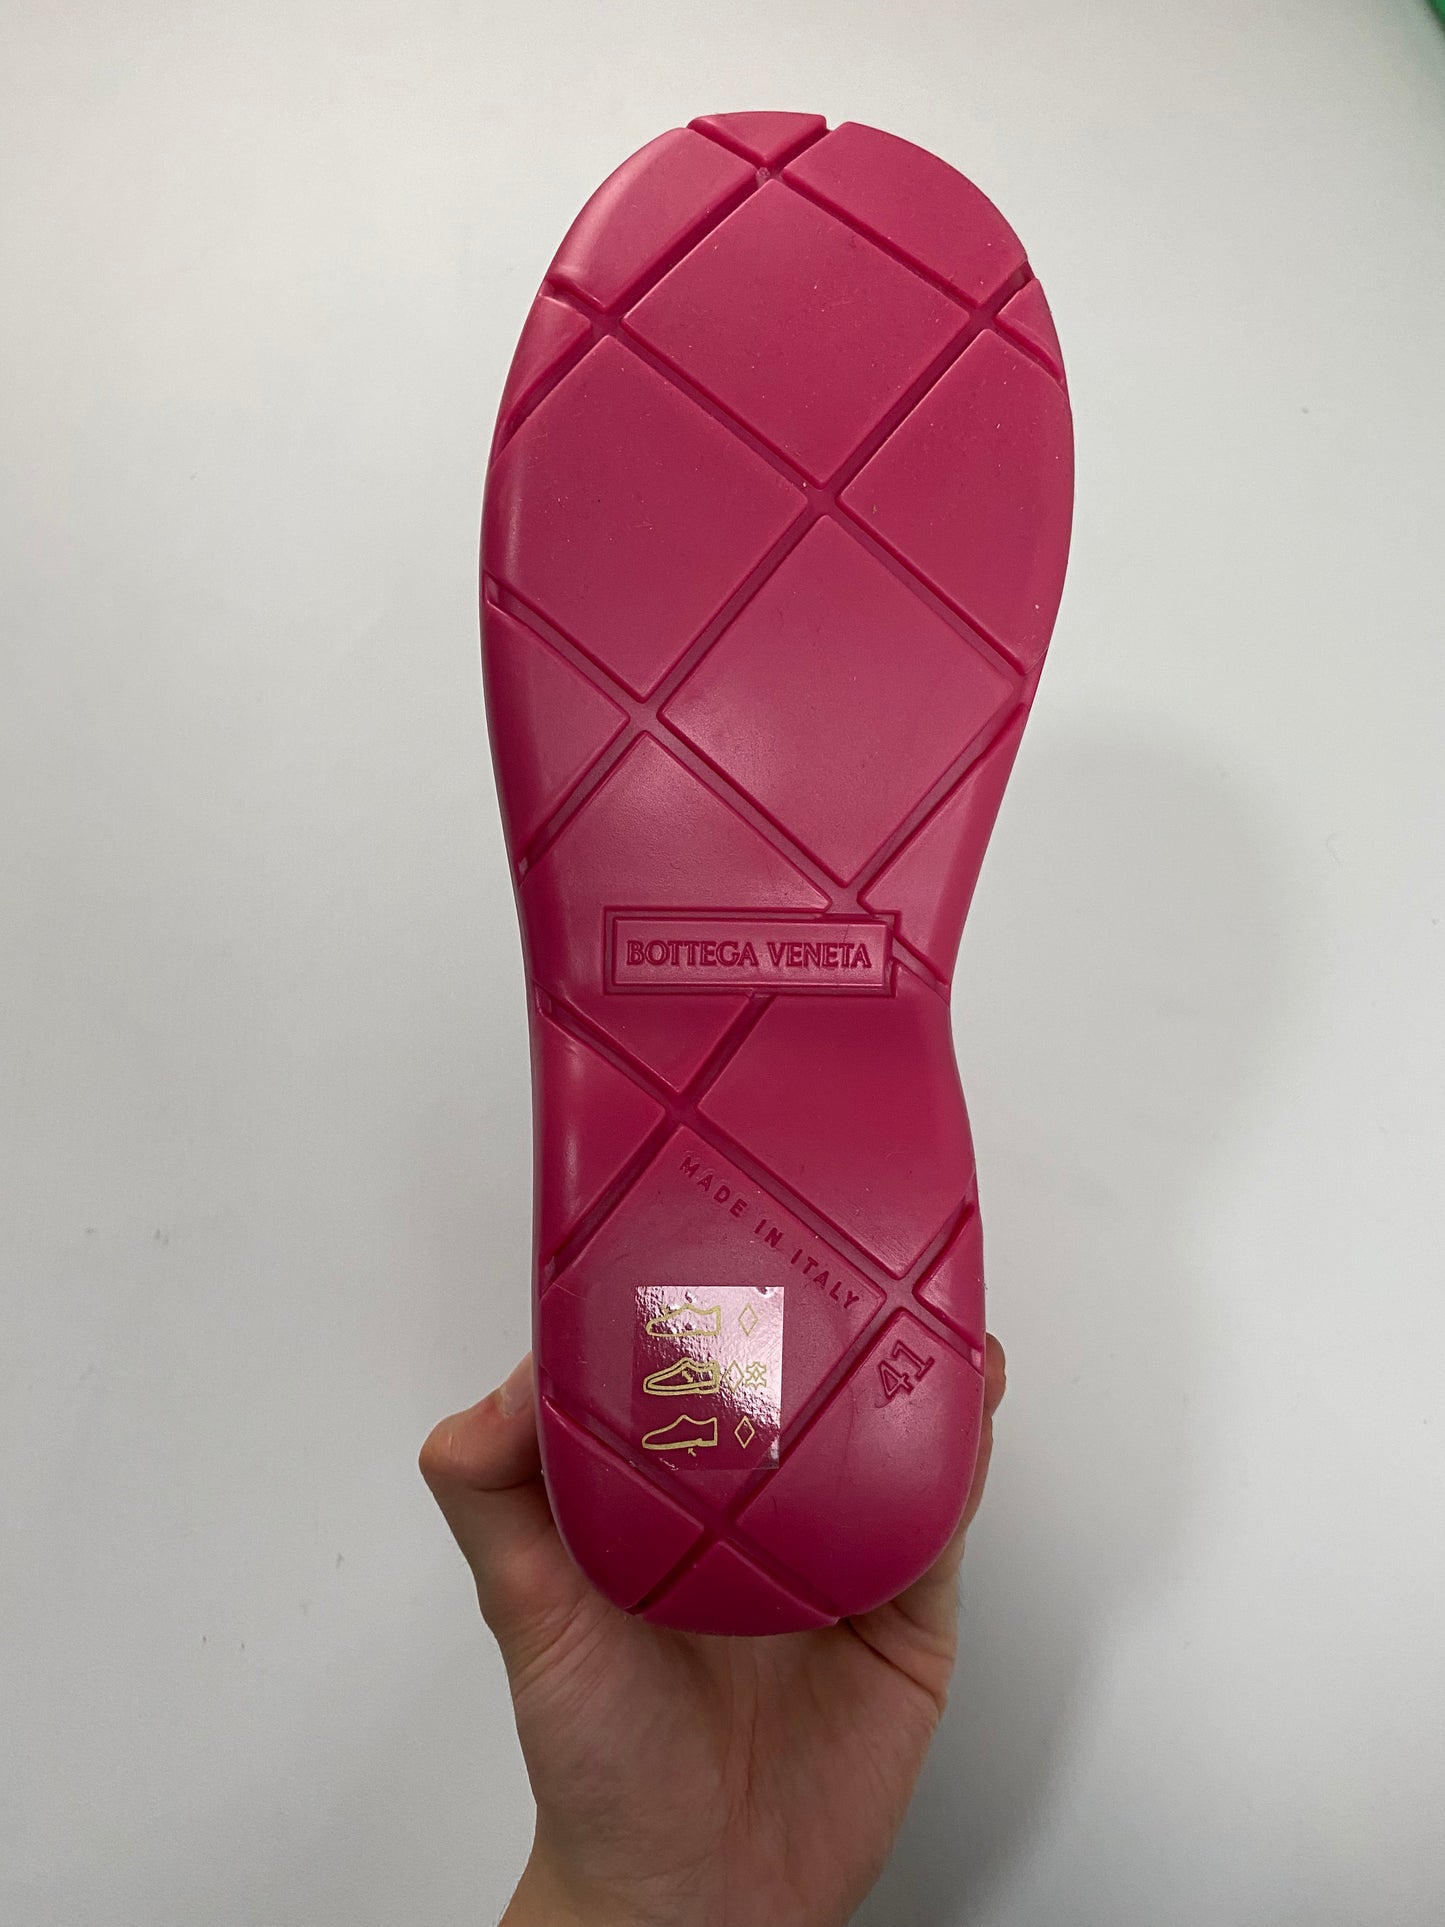 Bottega Veneta by Daniel Lee puddle boots in candy pink SZ:8/EU41